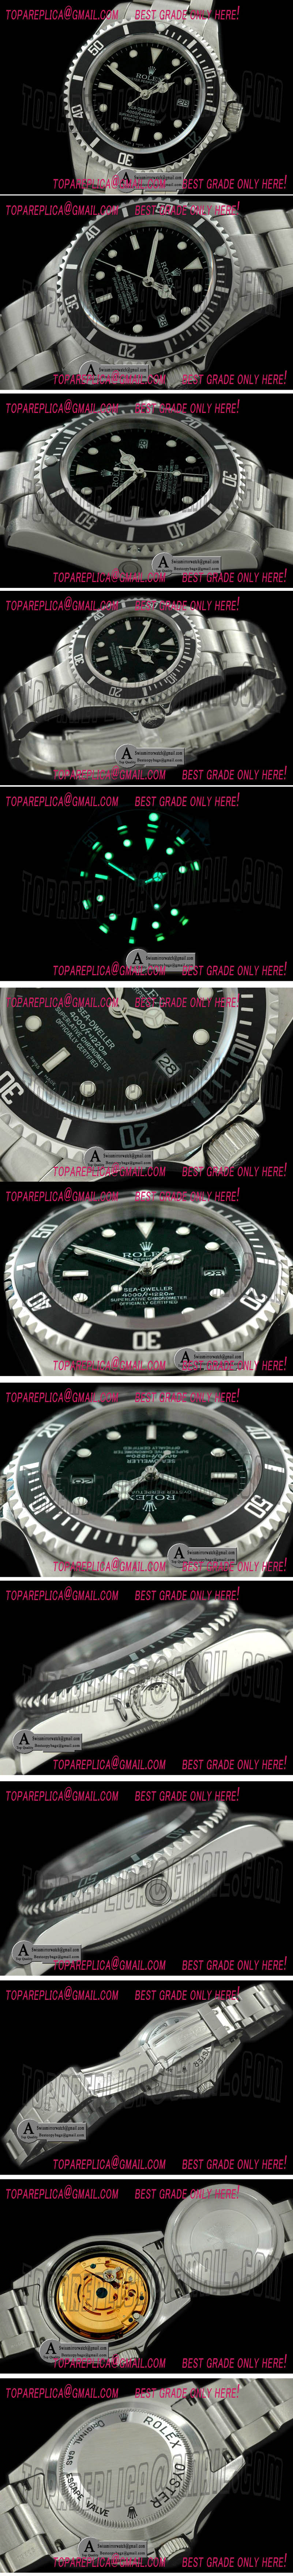 Rolex  Classic Sea Dweller 16600 Asian-2813 Replica Watches